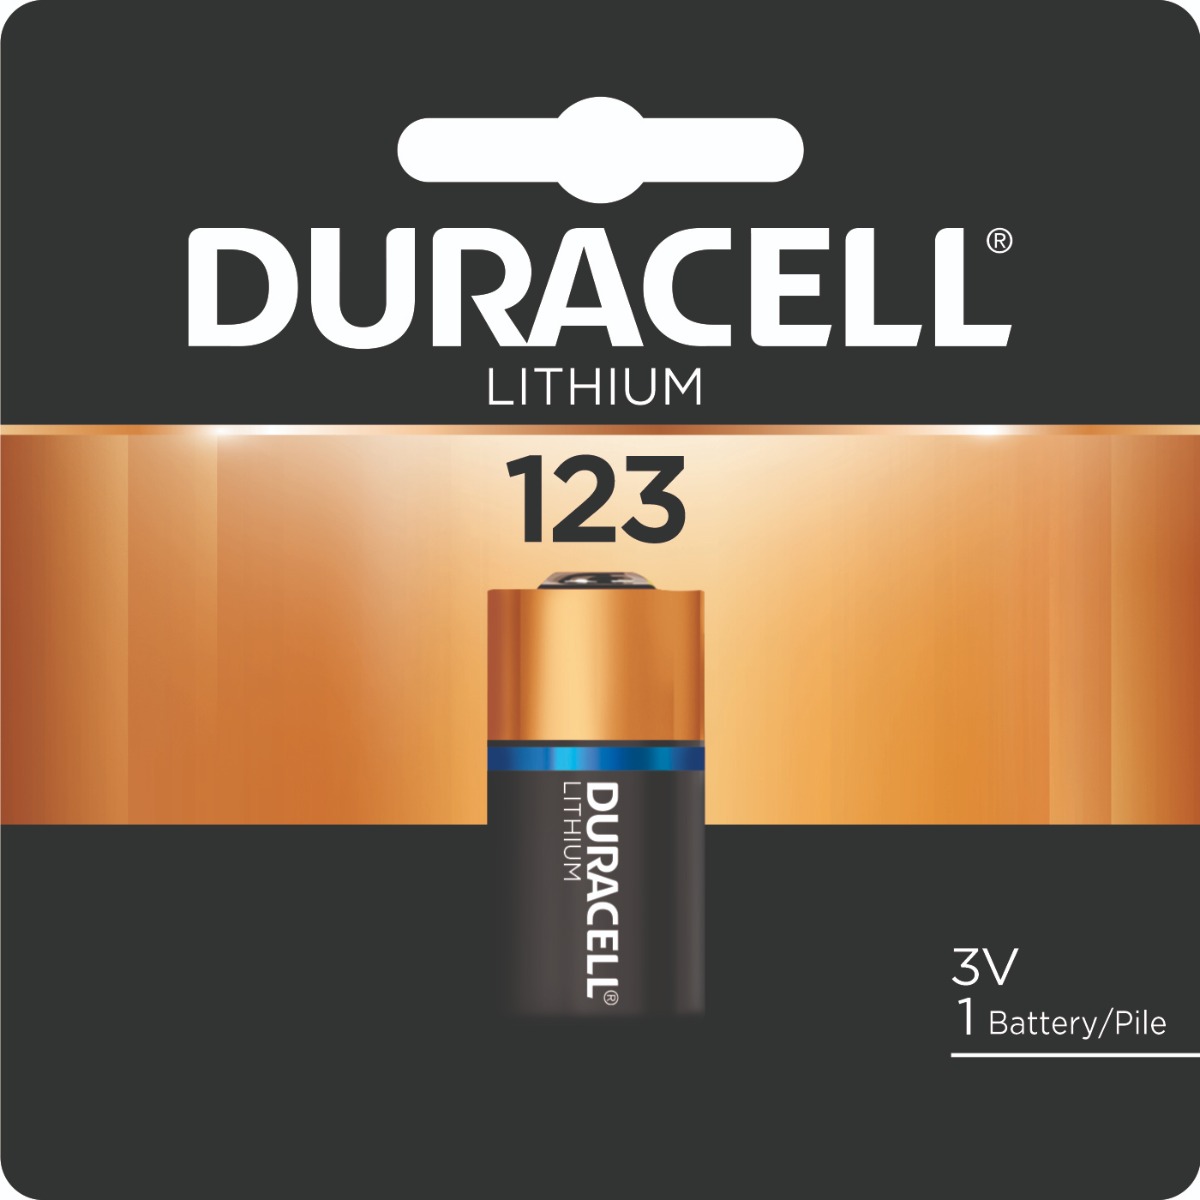 CR2 - Lithium Batteries - Primary Batteries - Panasonic